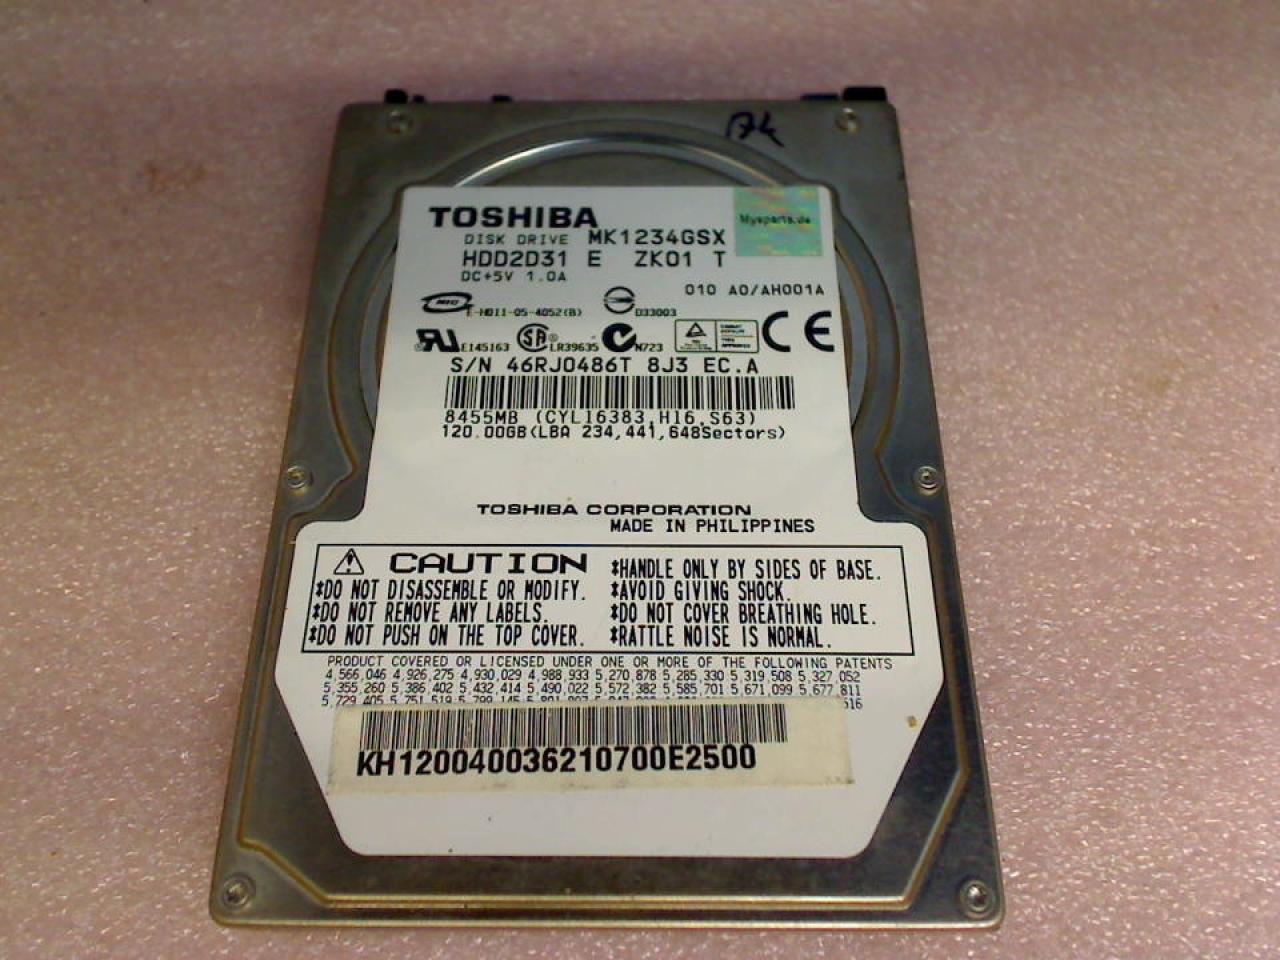 HDD hard drive 2.5" 120GB Toshiba HDD2D31 E ZK01 T SATA Targa Traveller 1524 X2